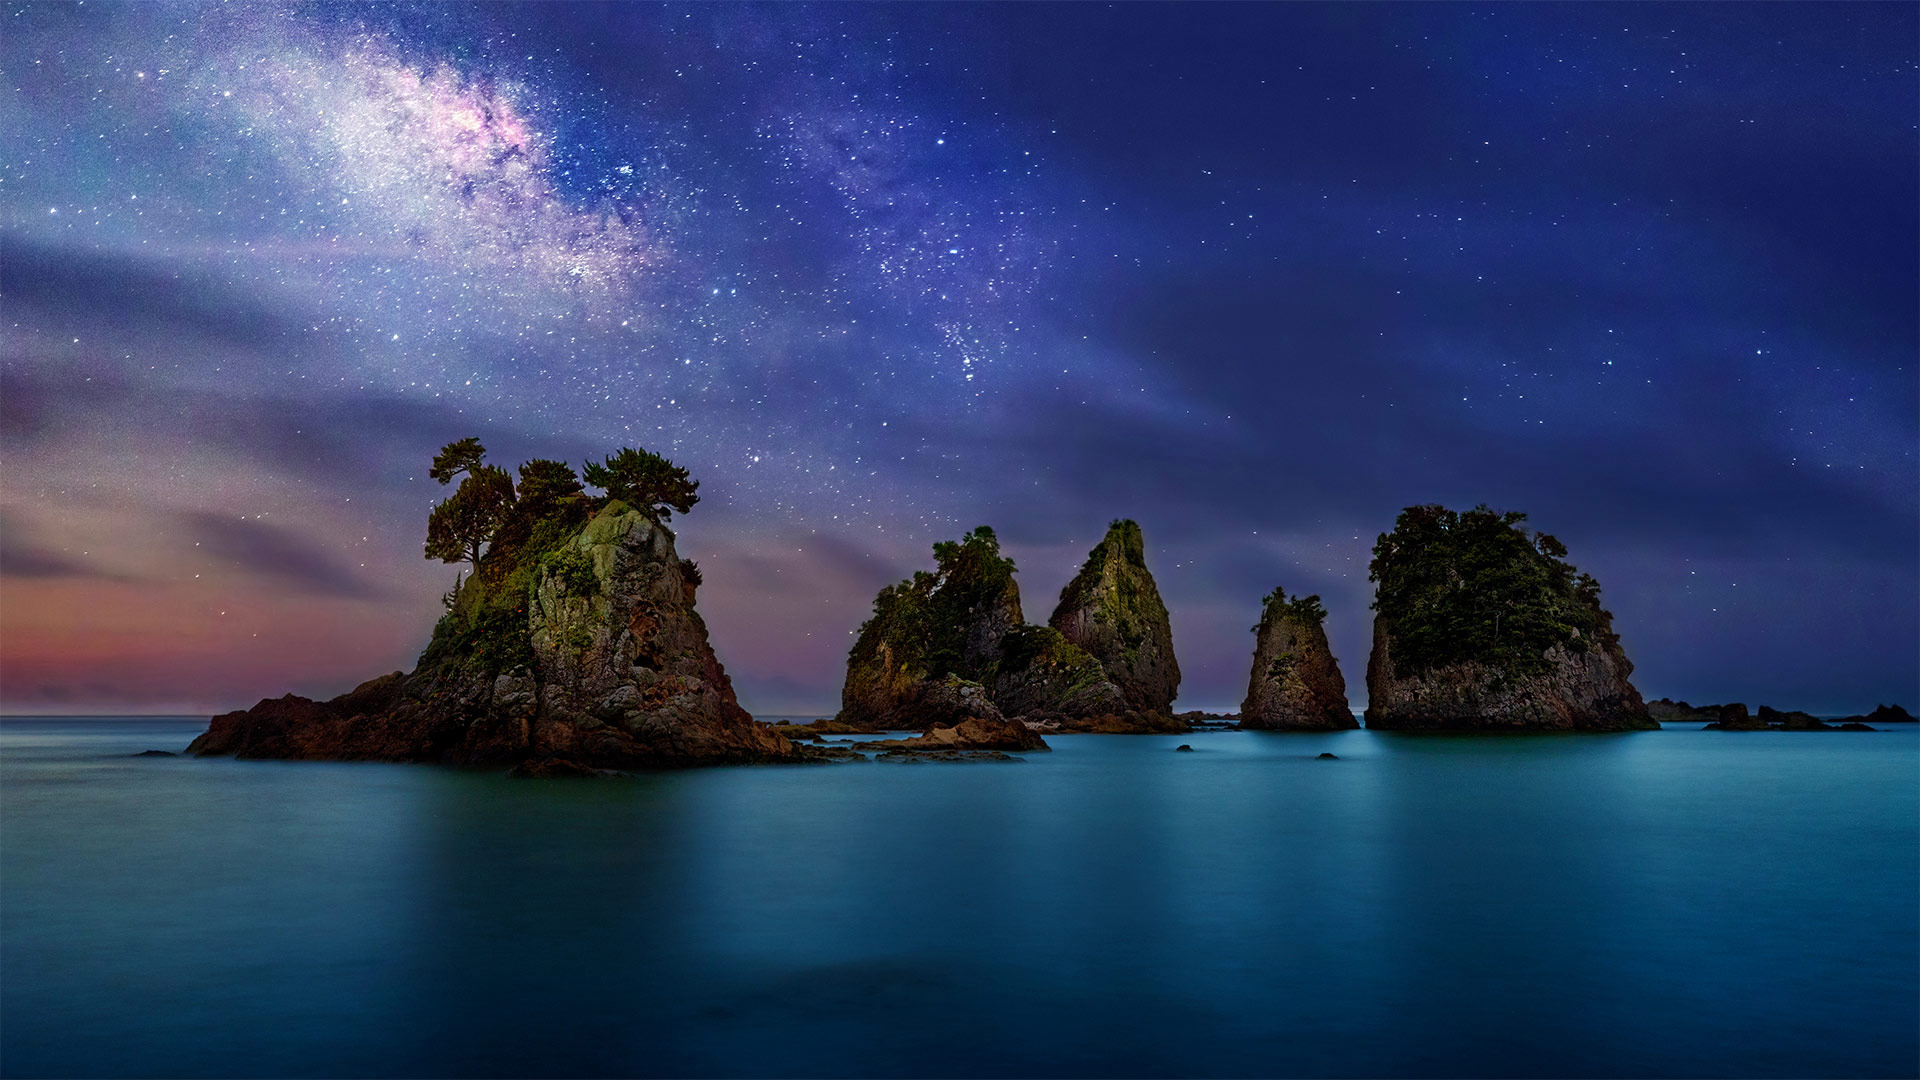 The Minokake-Iwa rocks off the coast of the Izu Peninsula, Japan - Krzysztof Baranowski/Getty Images)